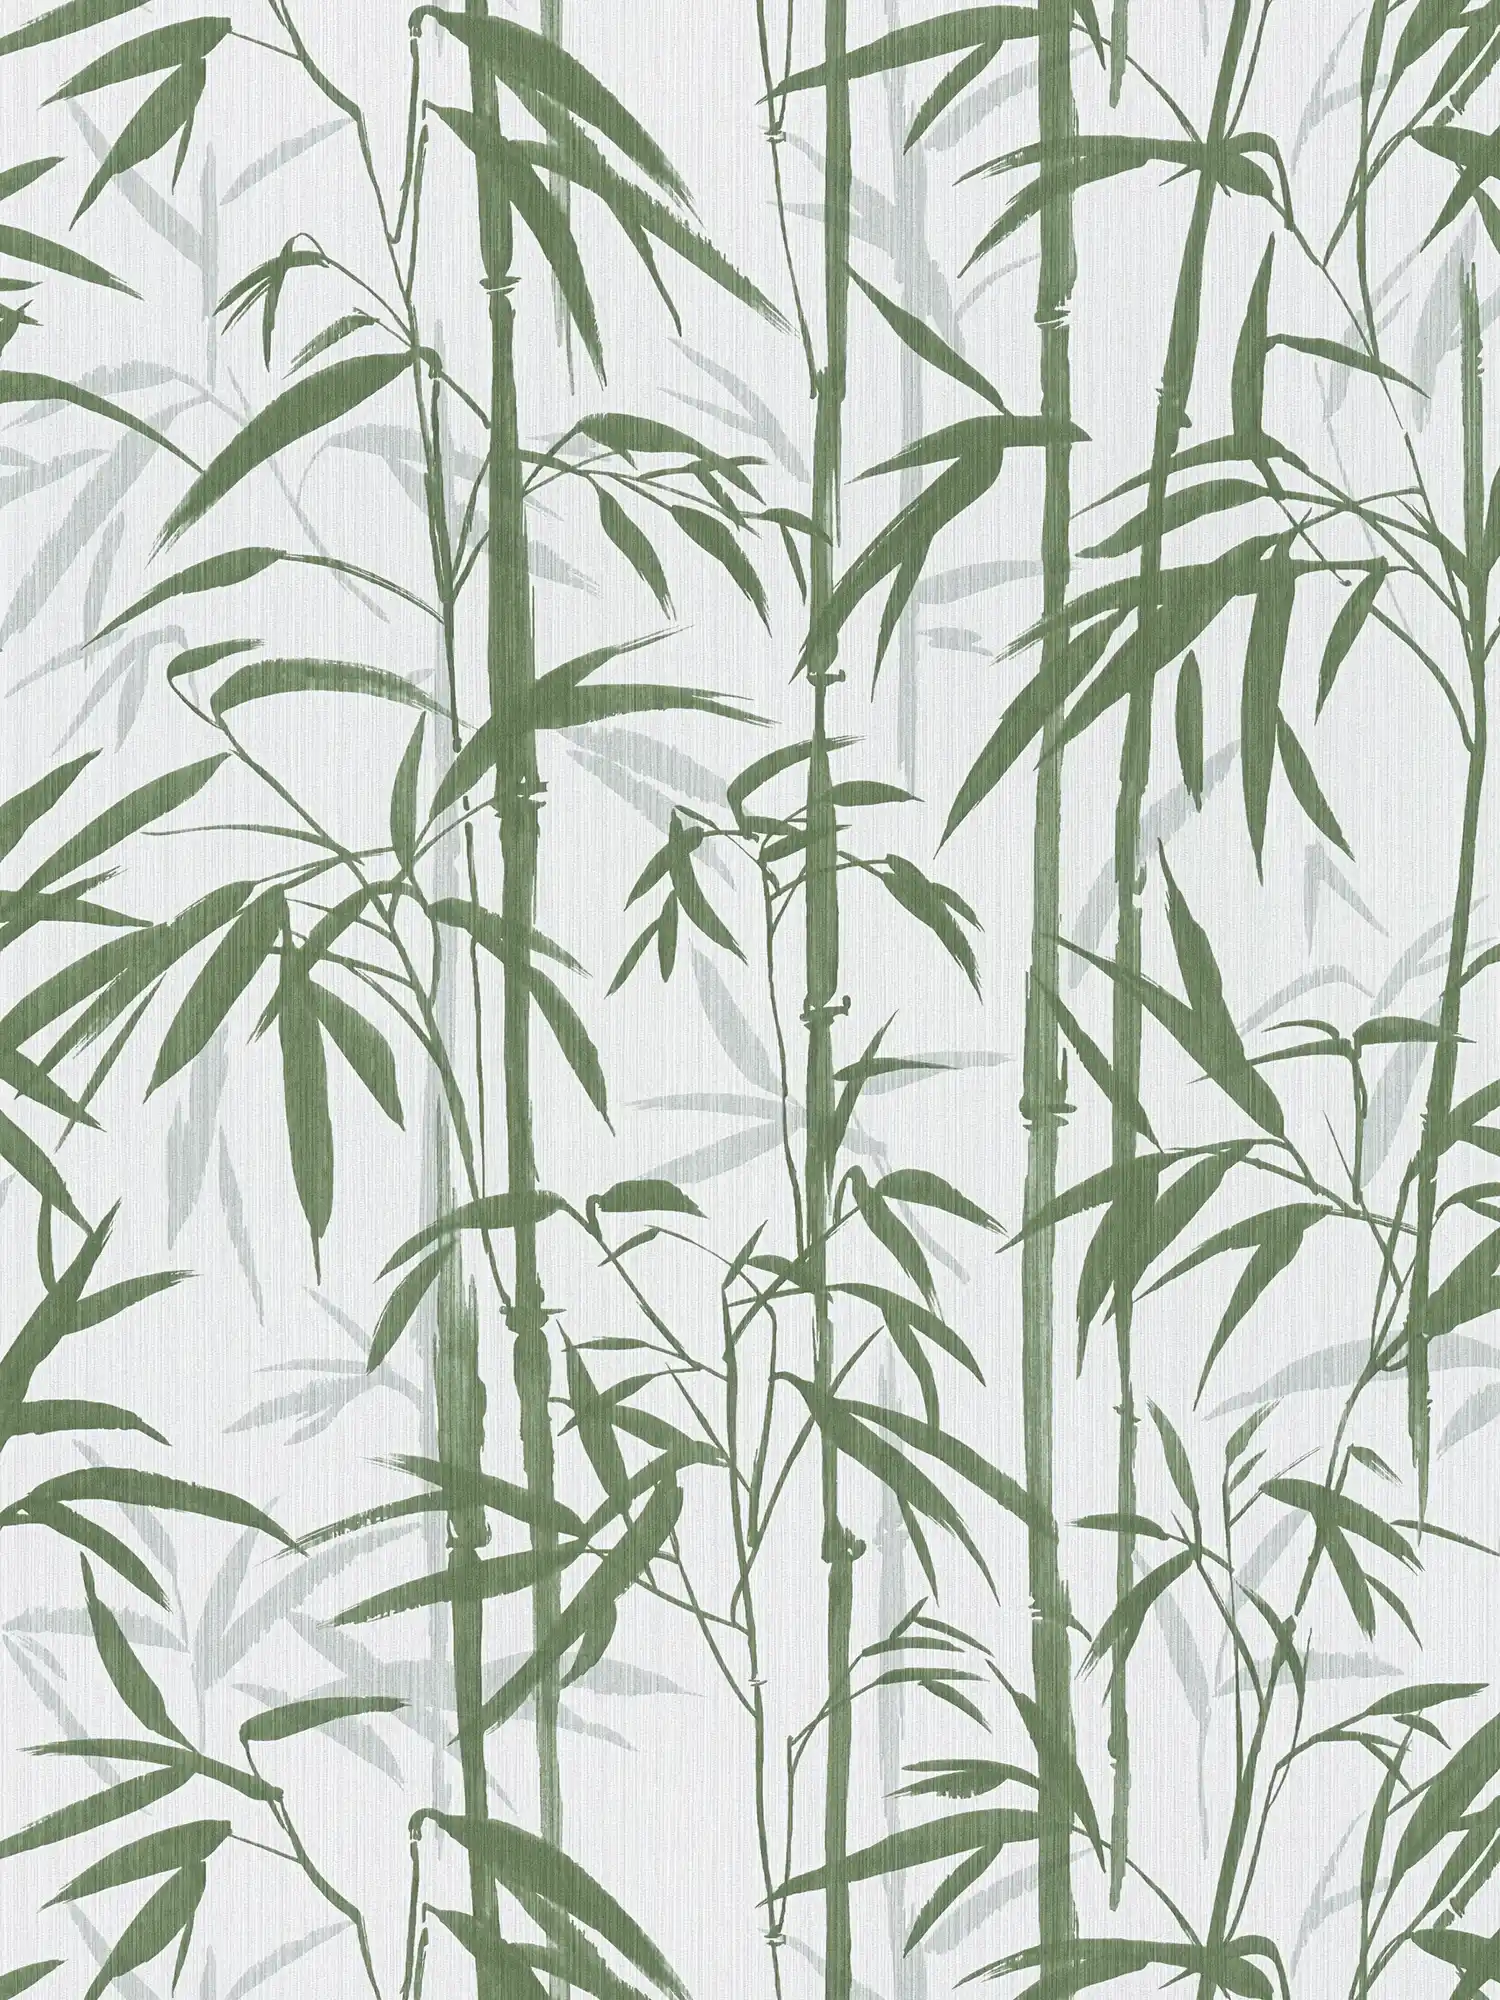         MICHALSKY papier peint intissé motif naturel bambou - crème, vert
    